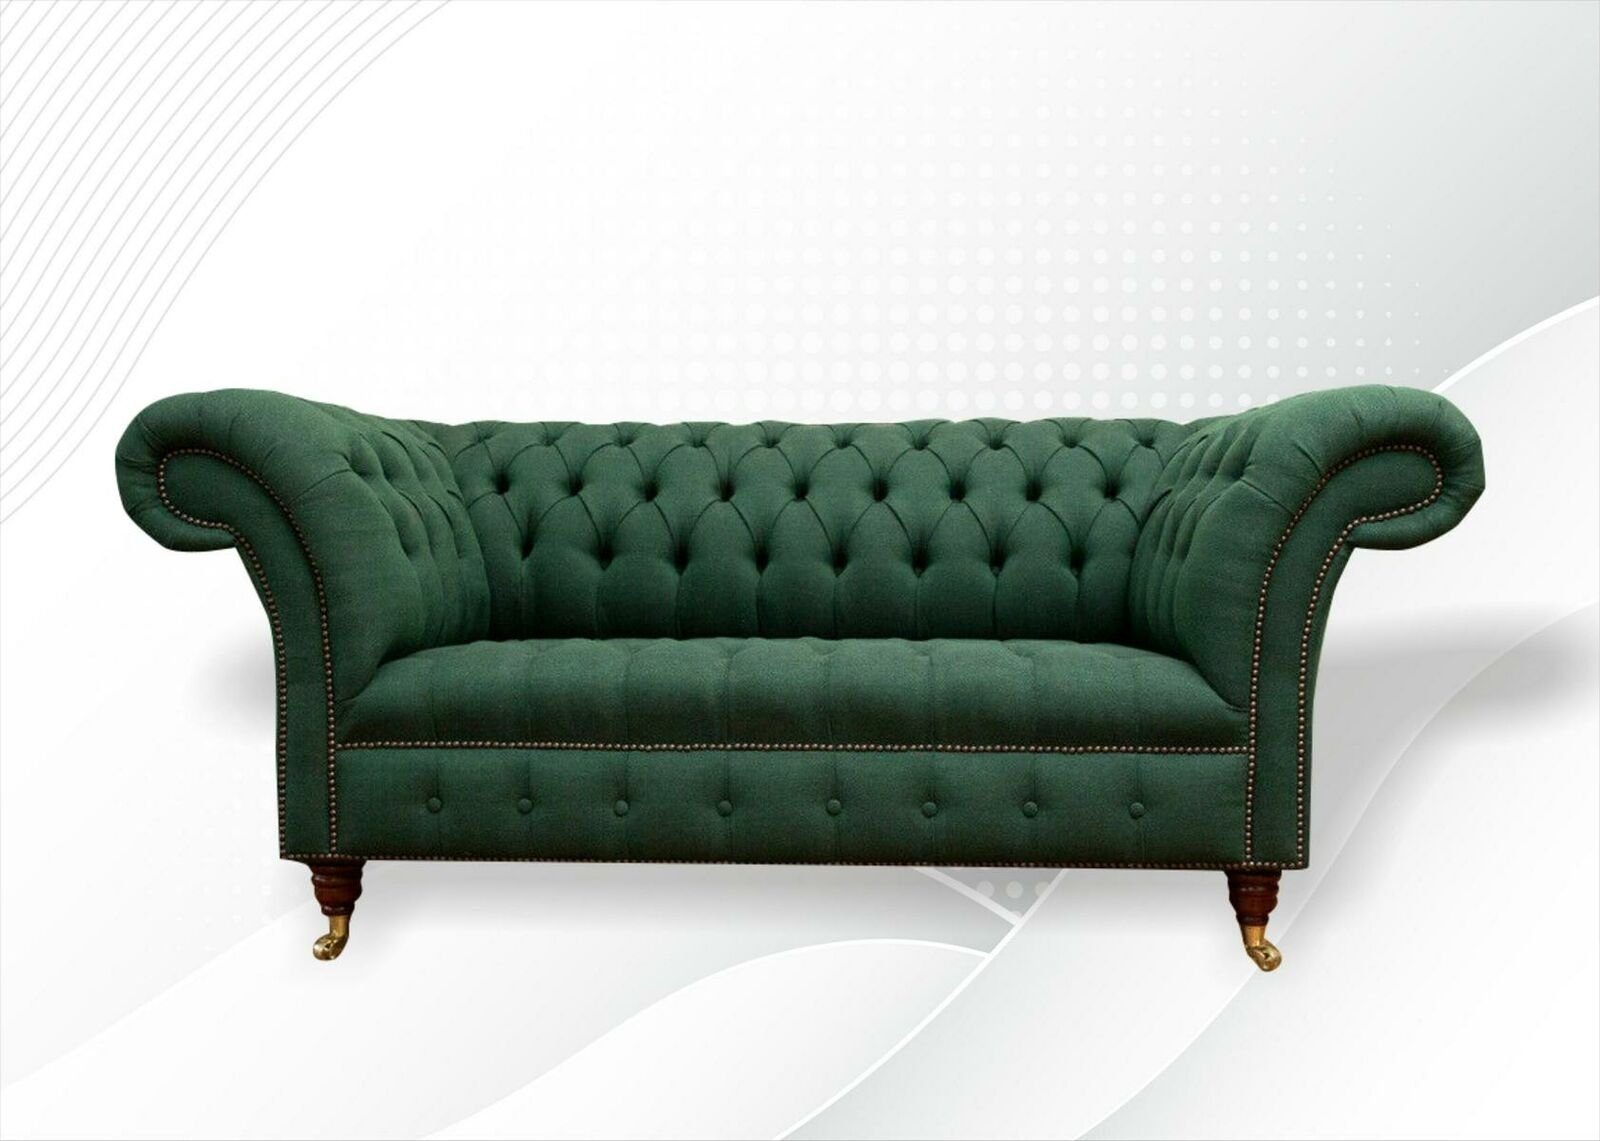 JVmoebel Chesterfield-Sofa Luxus Moderner Chesterfield grüner Zweisitzer Textil Sofa Neu, Made in Europe